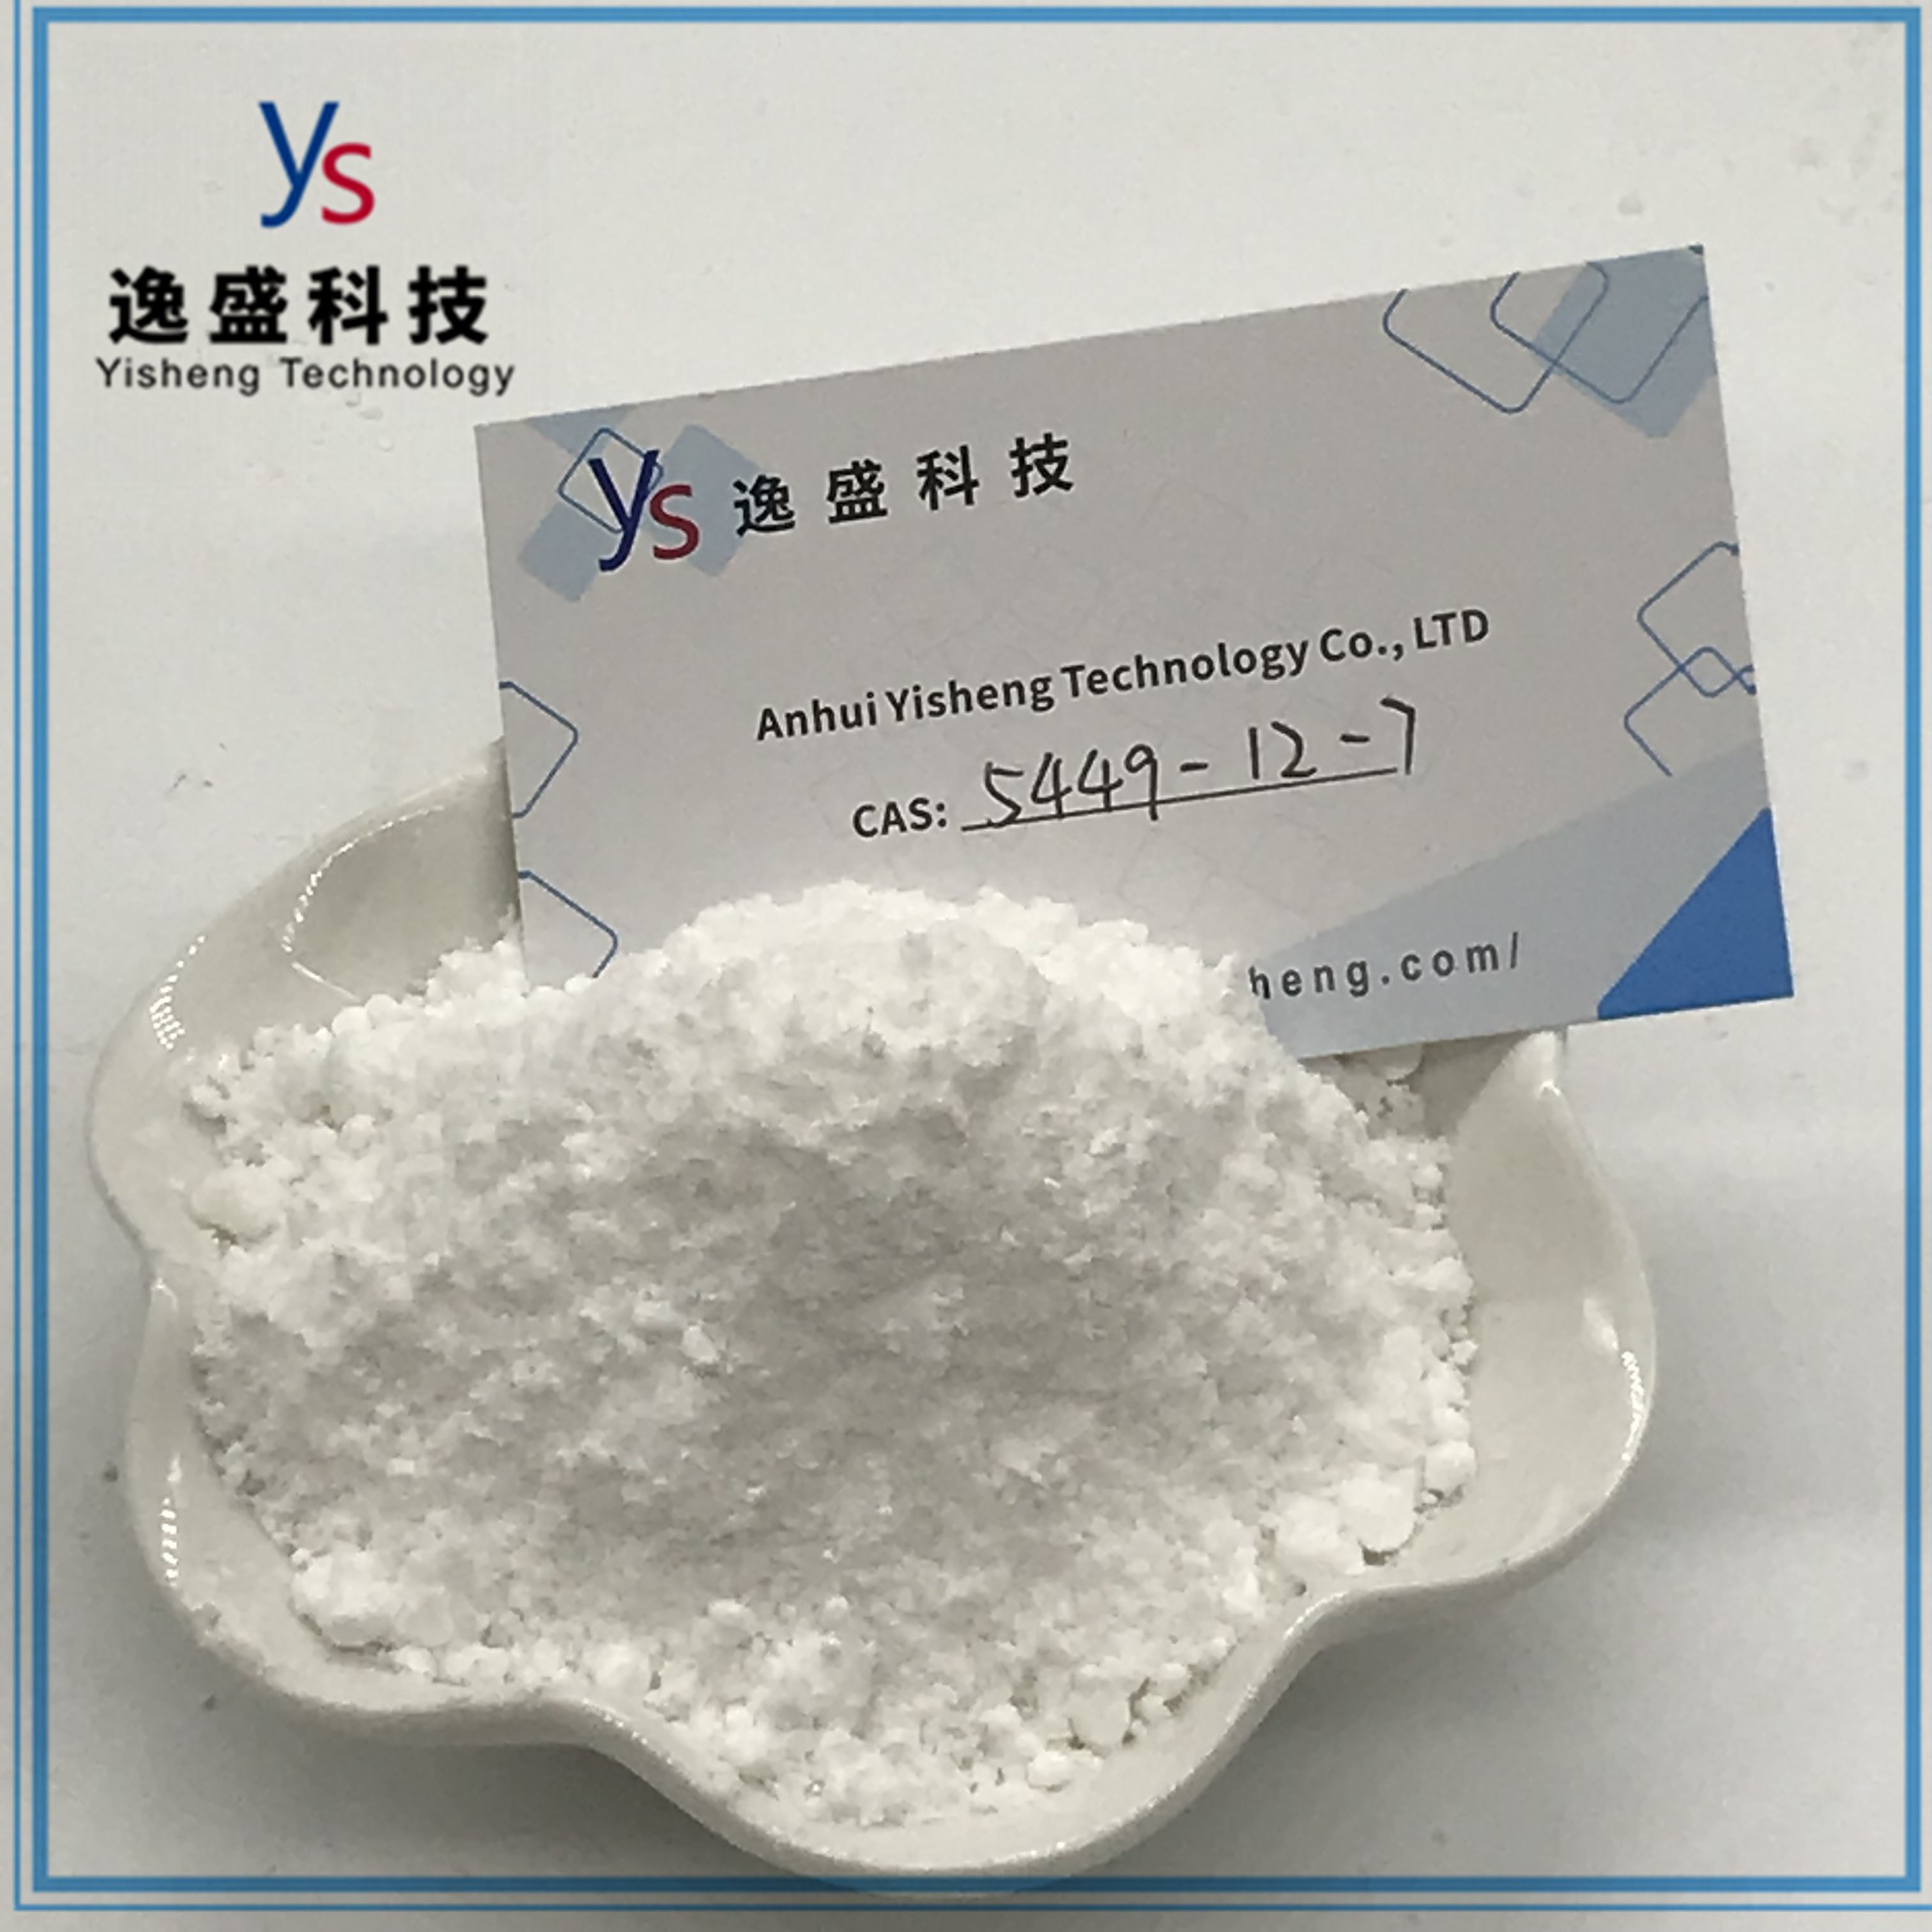  CAS 5449-12-7 Hot Selling 2-methyl-3-phenyl-oxirane-2-carboxylic acid